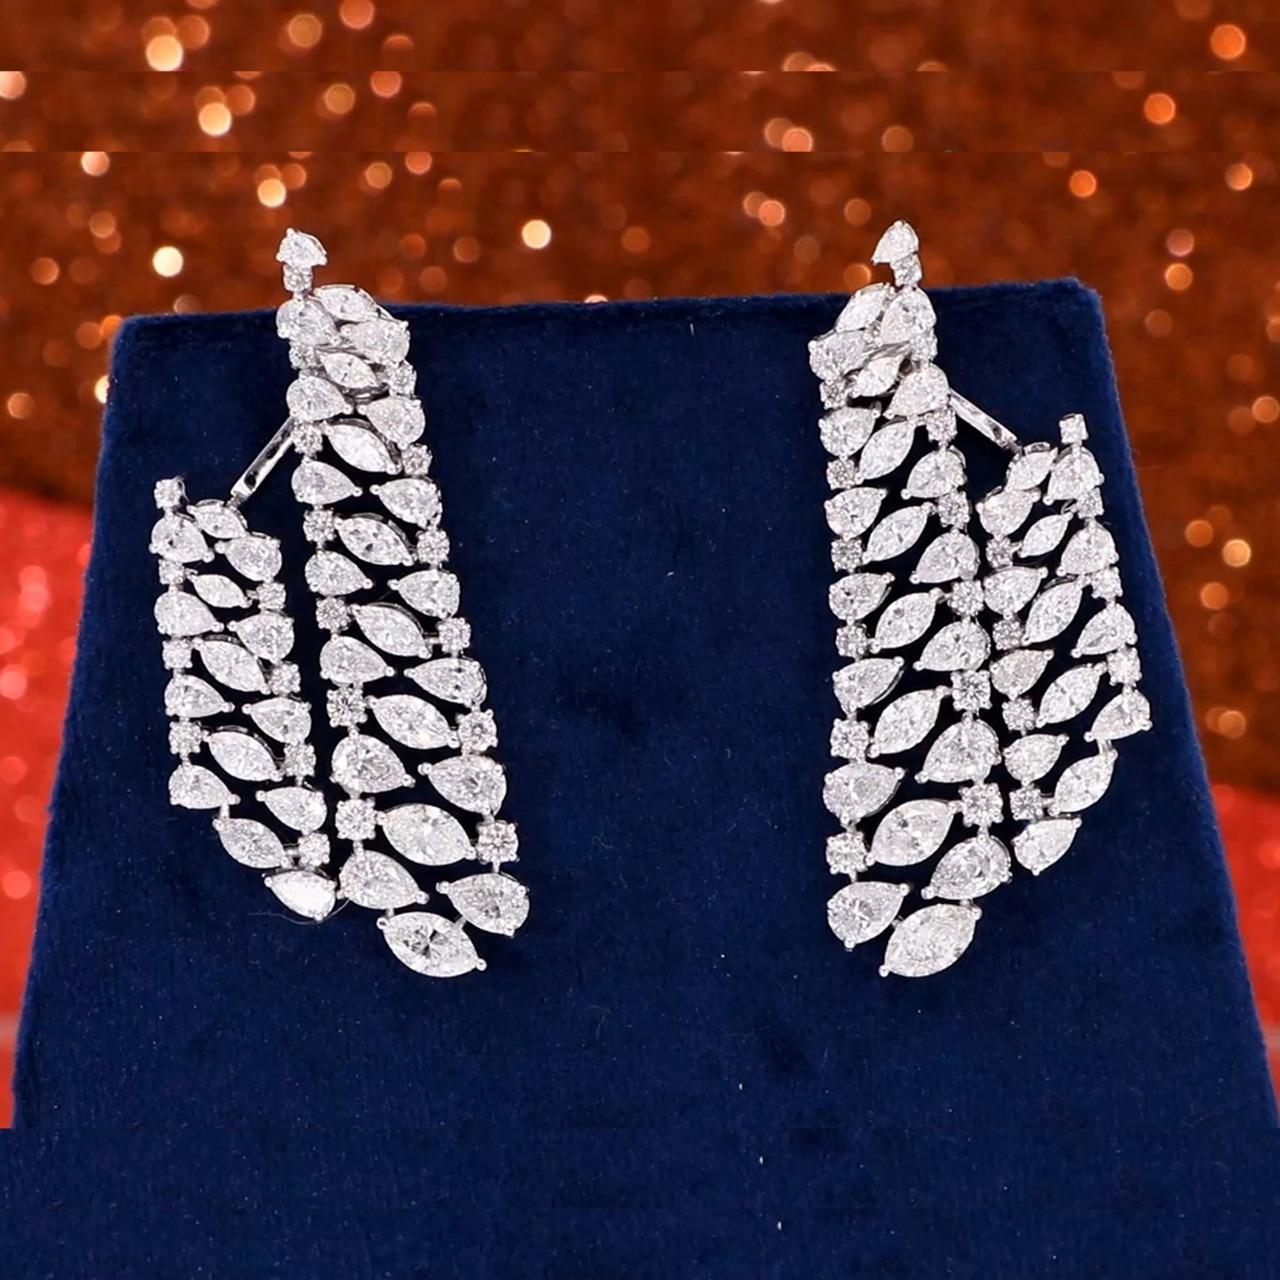 Women's Amazing Ct 13 of Diamonds on Earrings For Sale